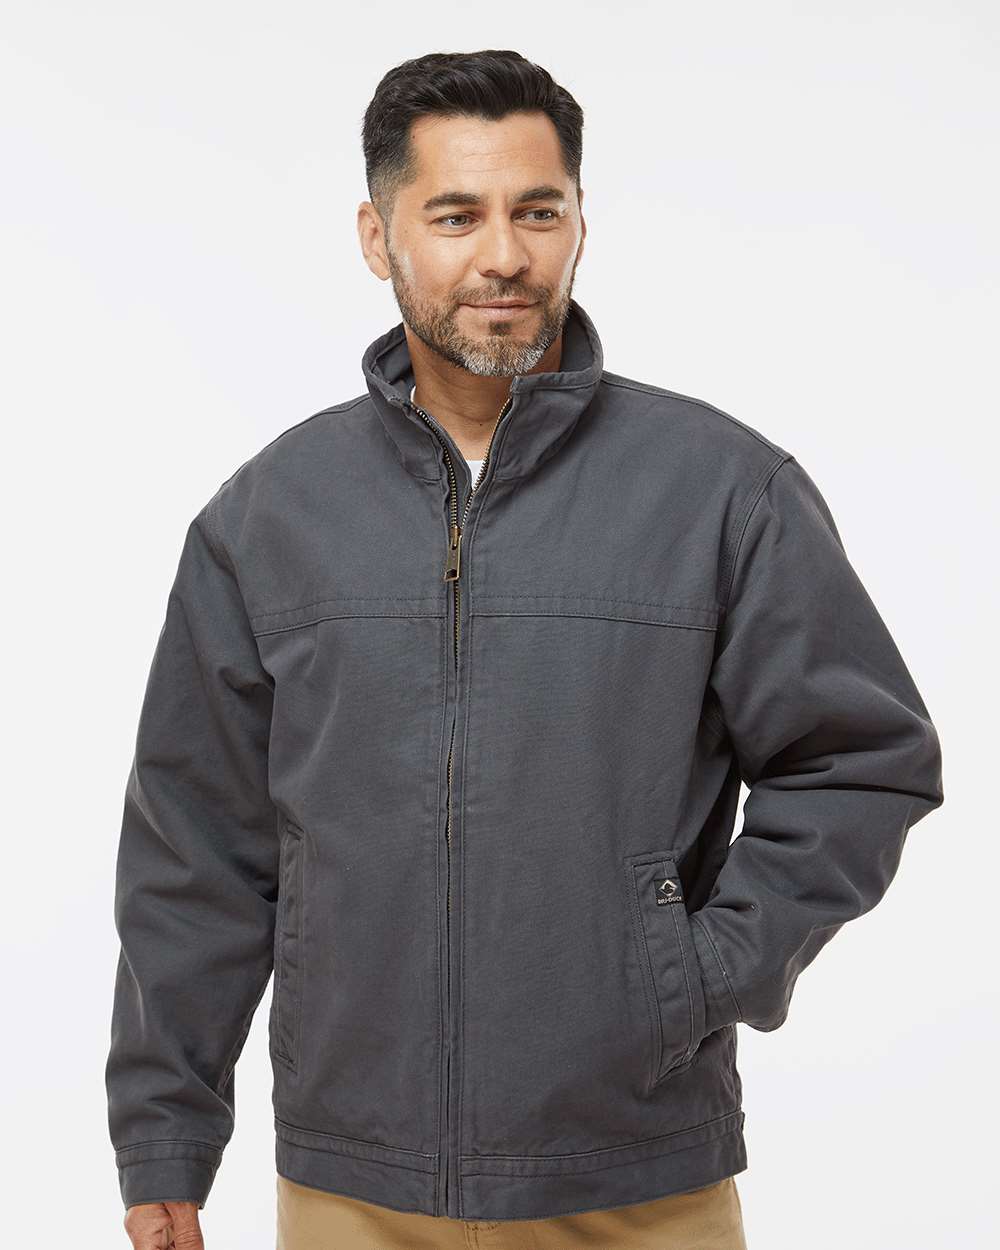 Maverick Boulder Cloth™ Men's Jacket with Blanket Lining - DRI DUCK 5028